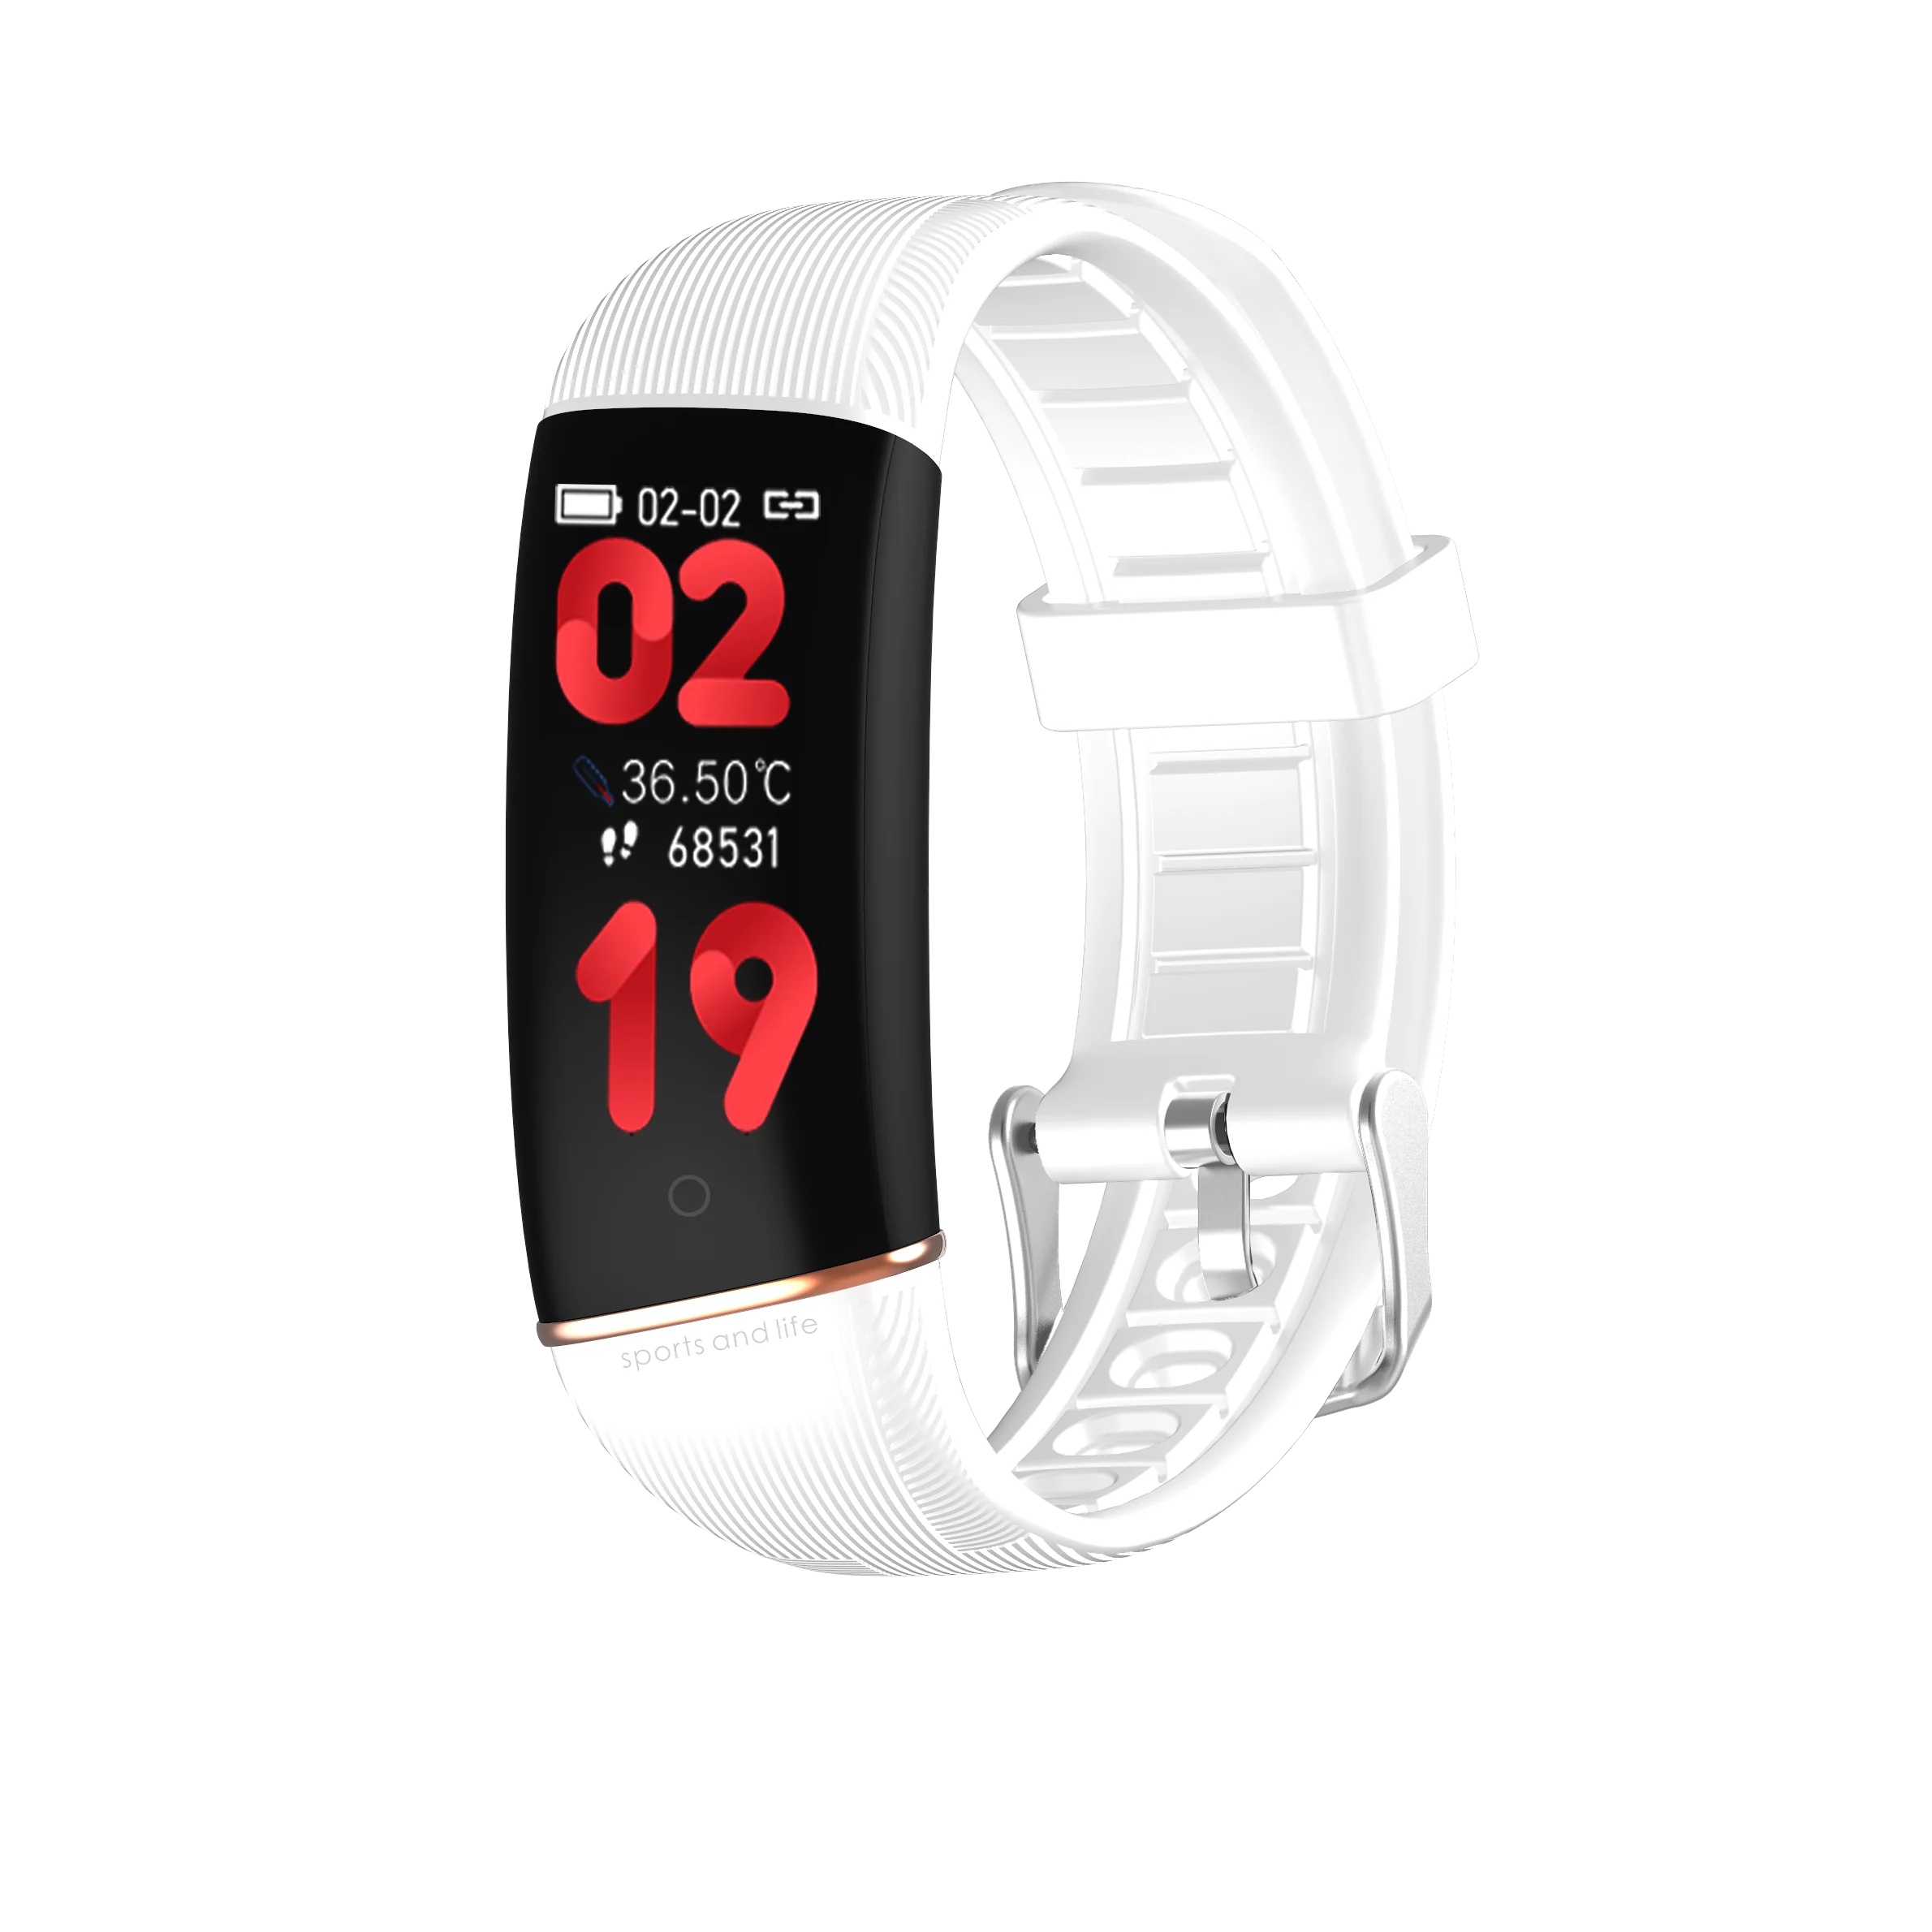 

New Arrival Smart Bracelet E98S Body Temperature Health Sport Wristband IP67 Waterproof Blood Oxygen Monitor Smartband for Women, Pink,white, black